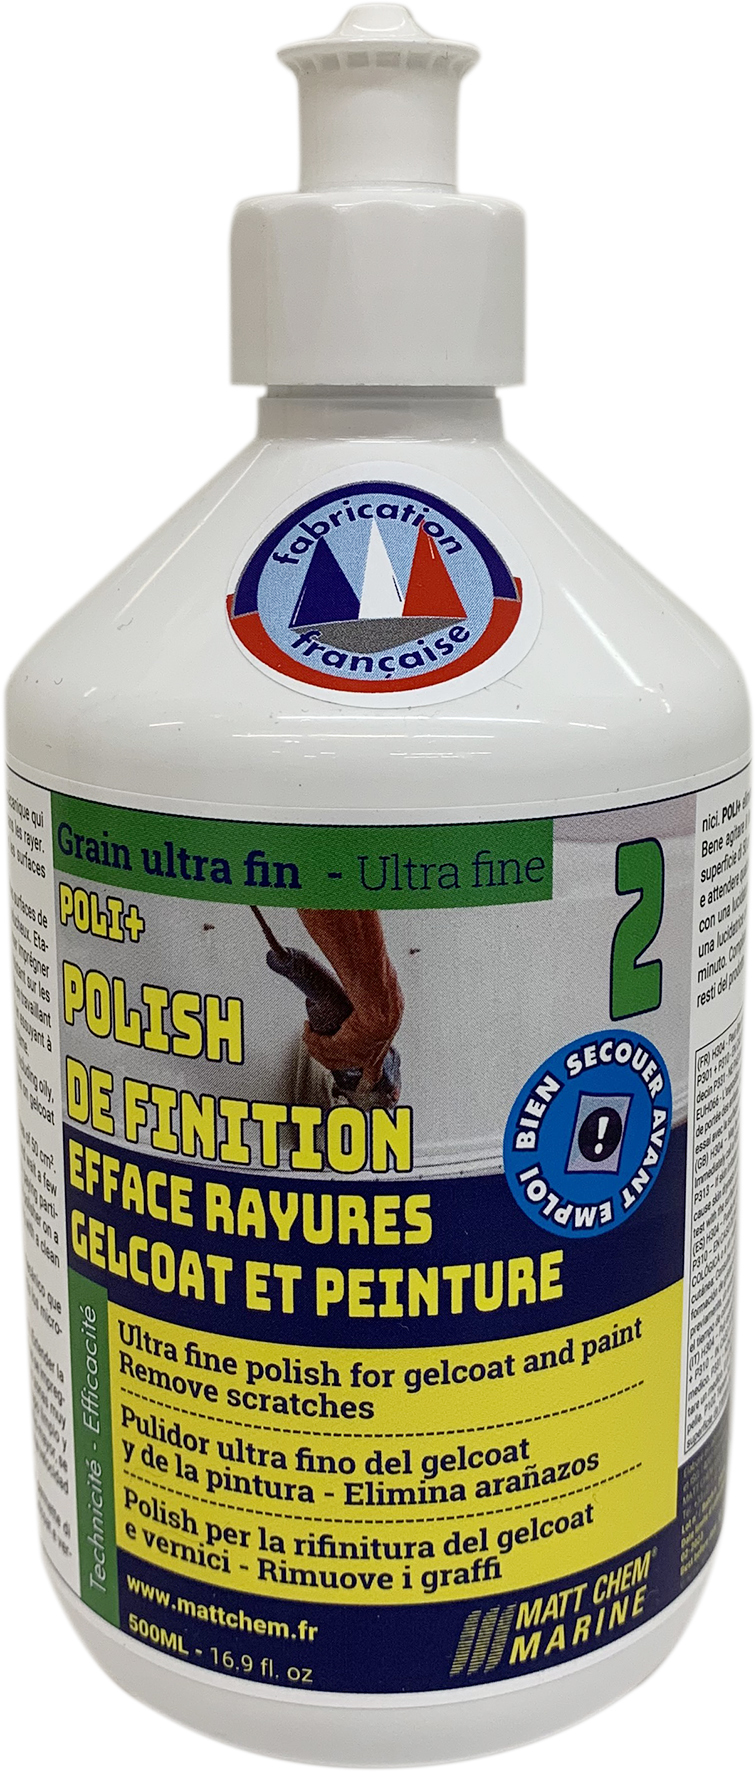 Ultrafine polish for gelcoat  Poli+